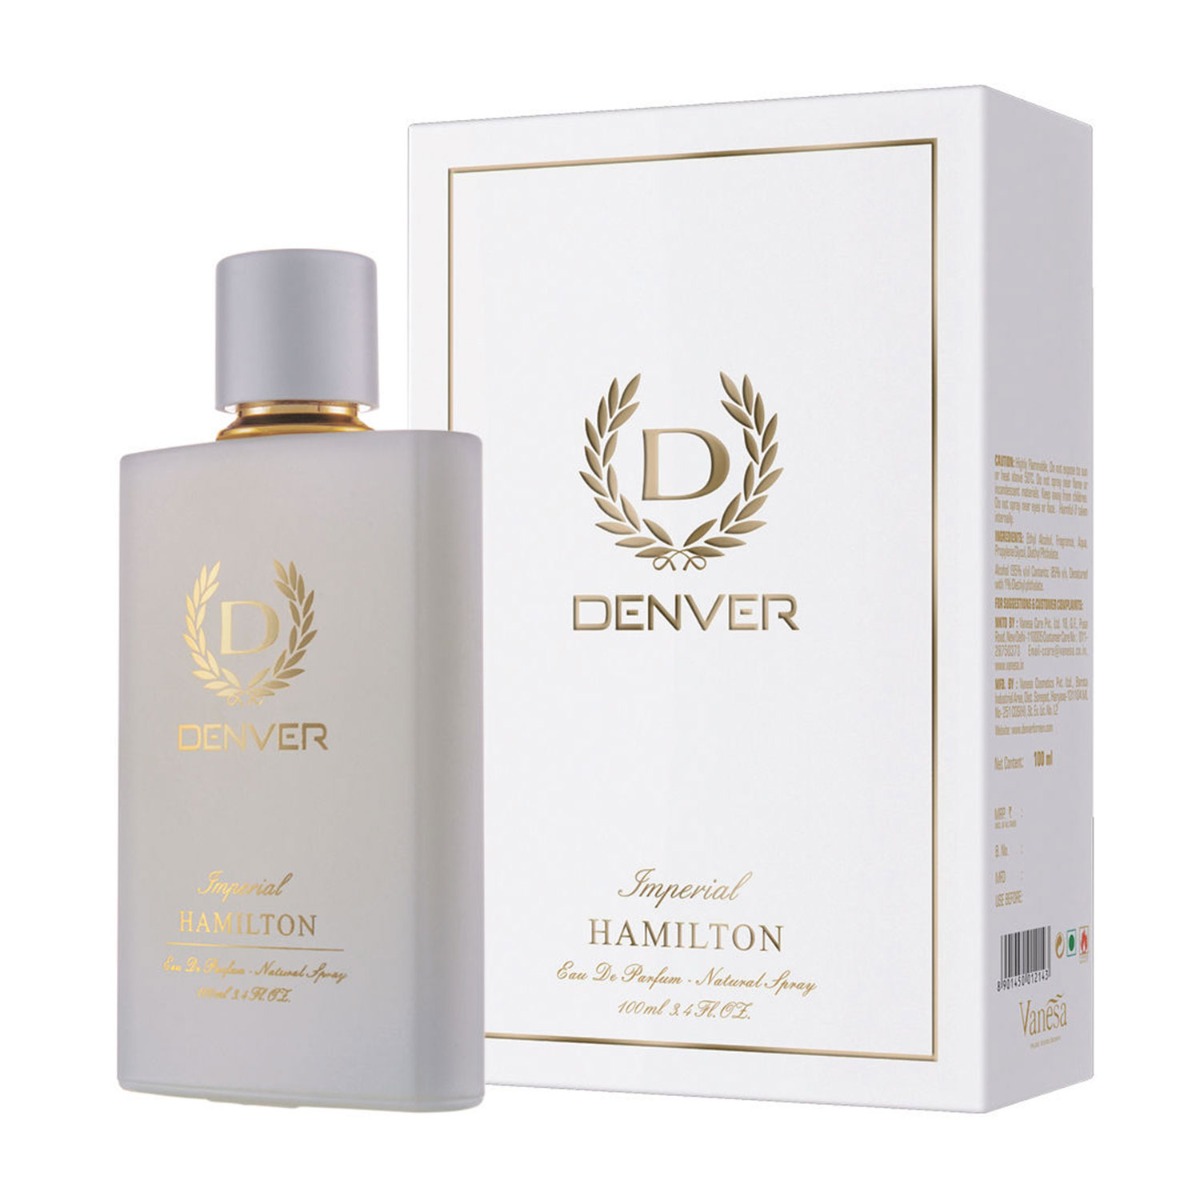 Denver Hamilton Imperial Perfume, 100ml